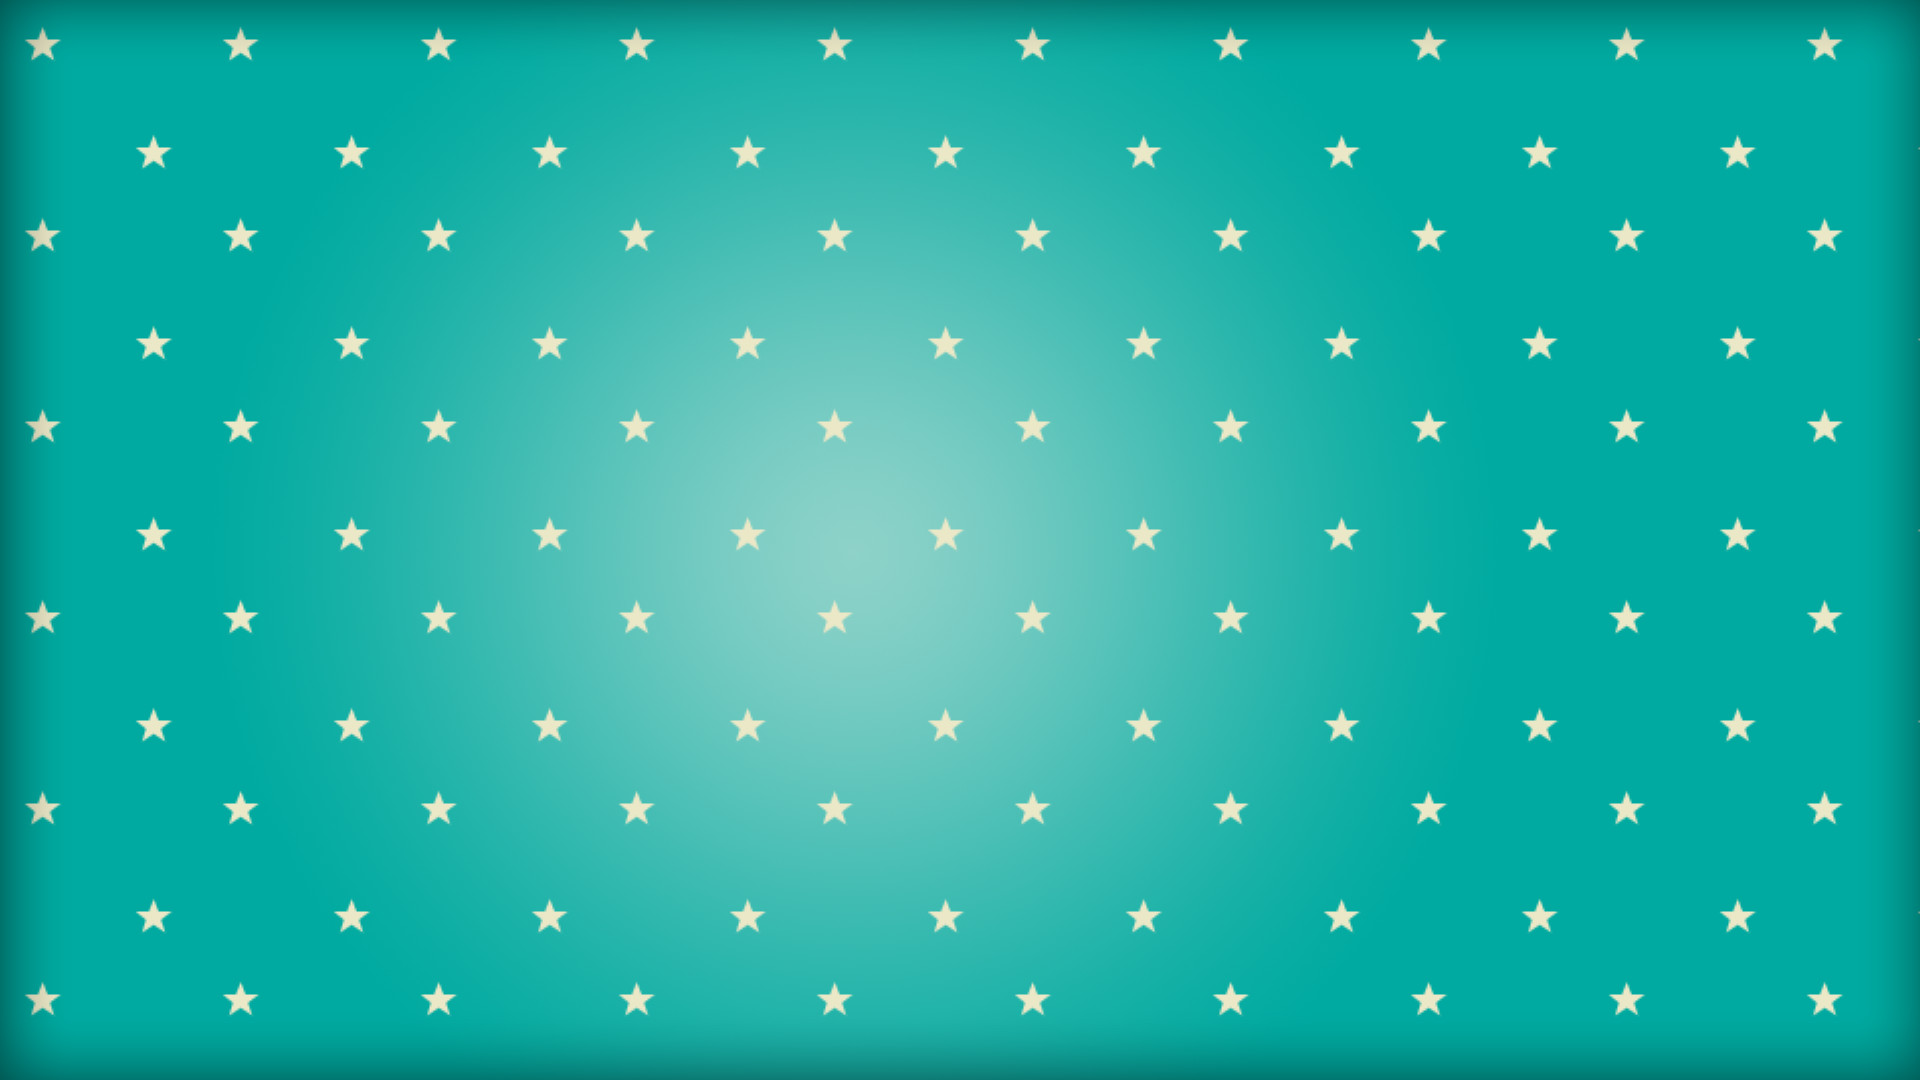 1920x1080 Pretty background with stars